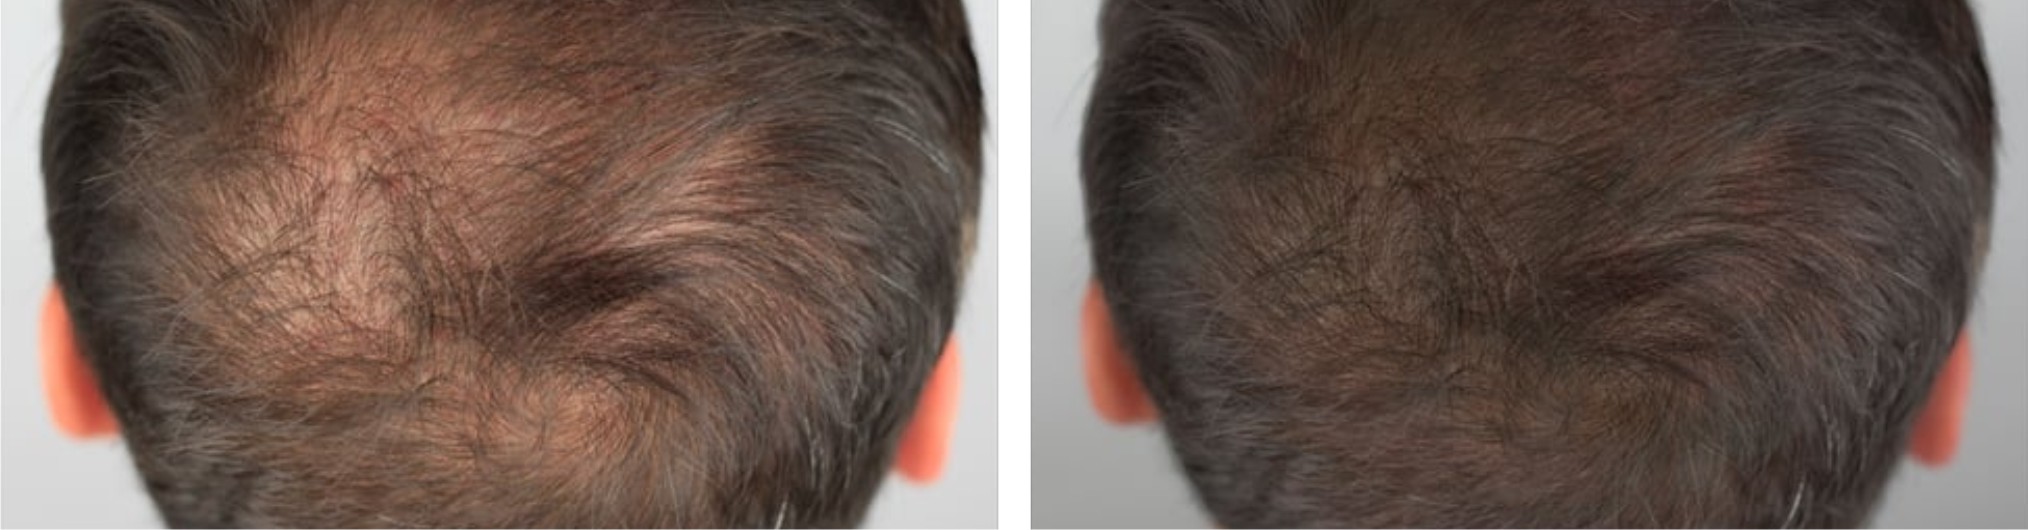 Hair Follicle Simulation Image Three